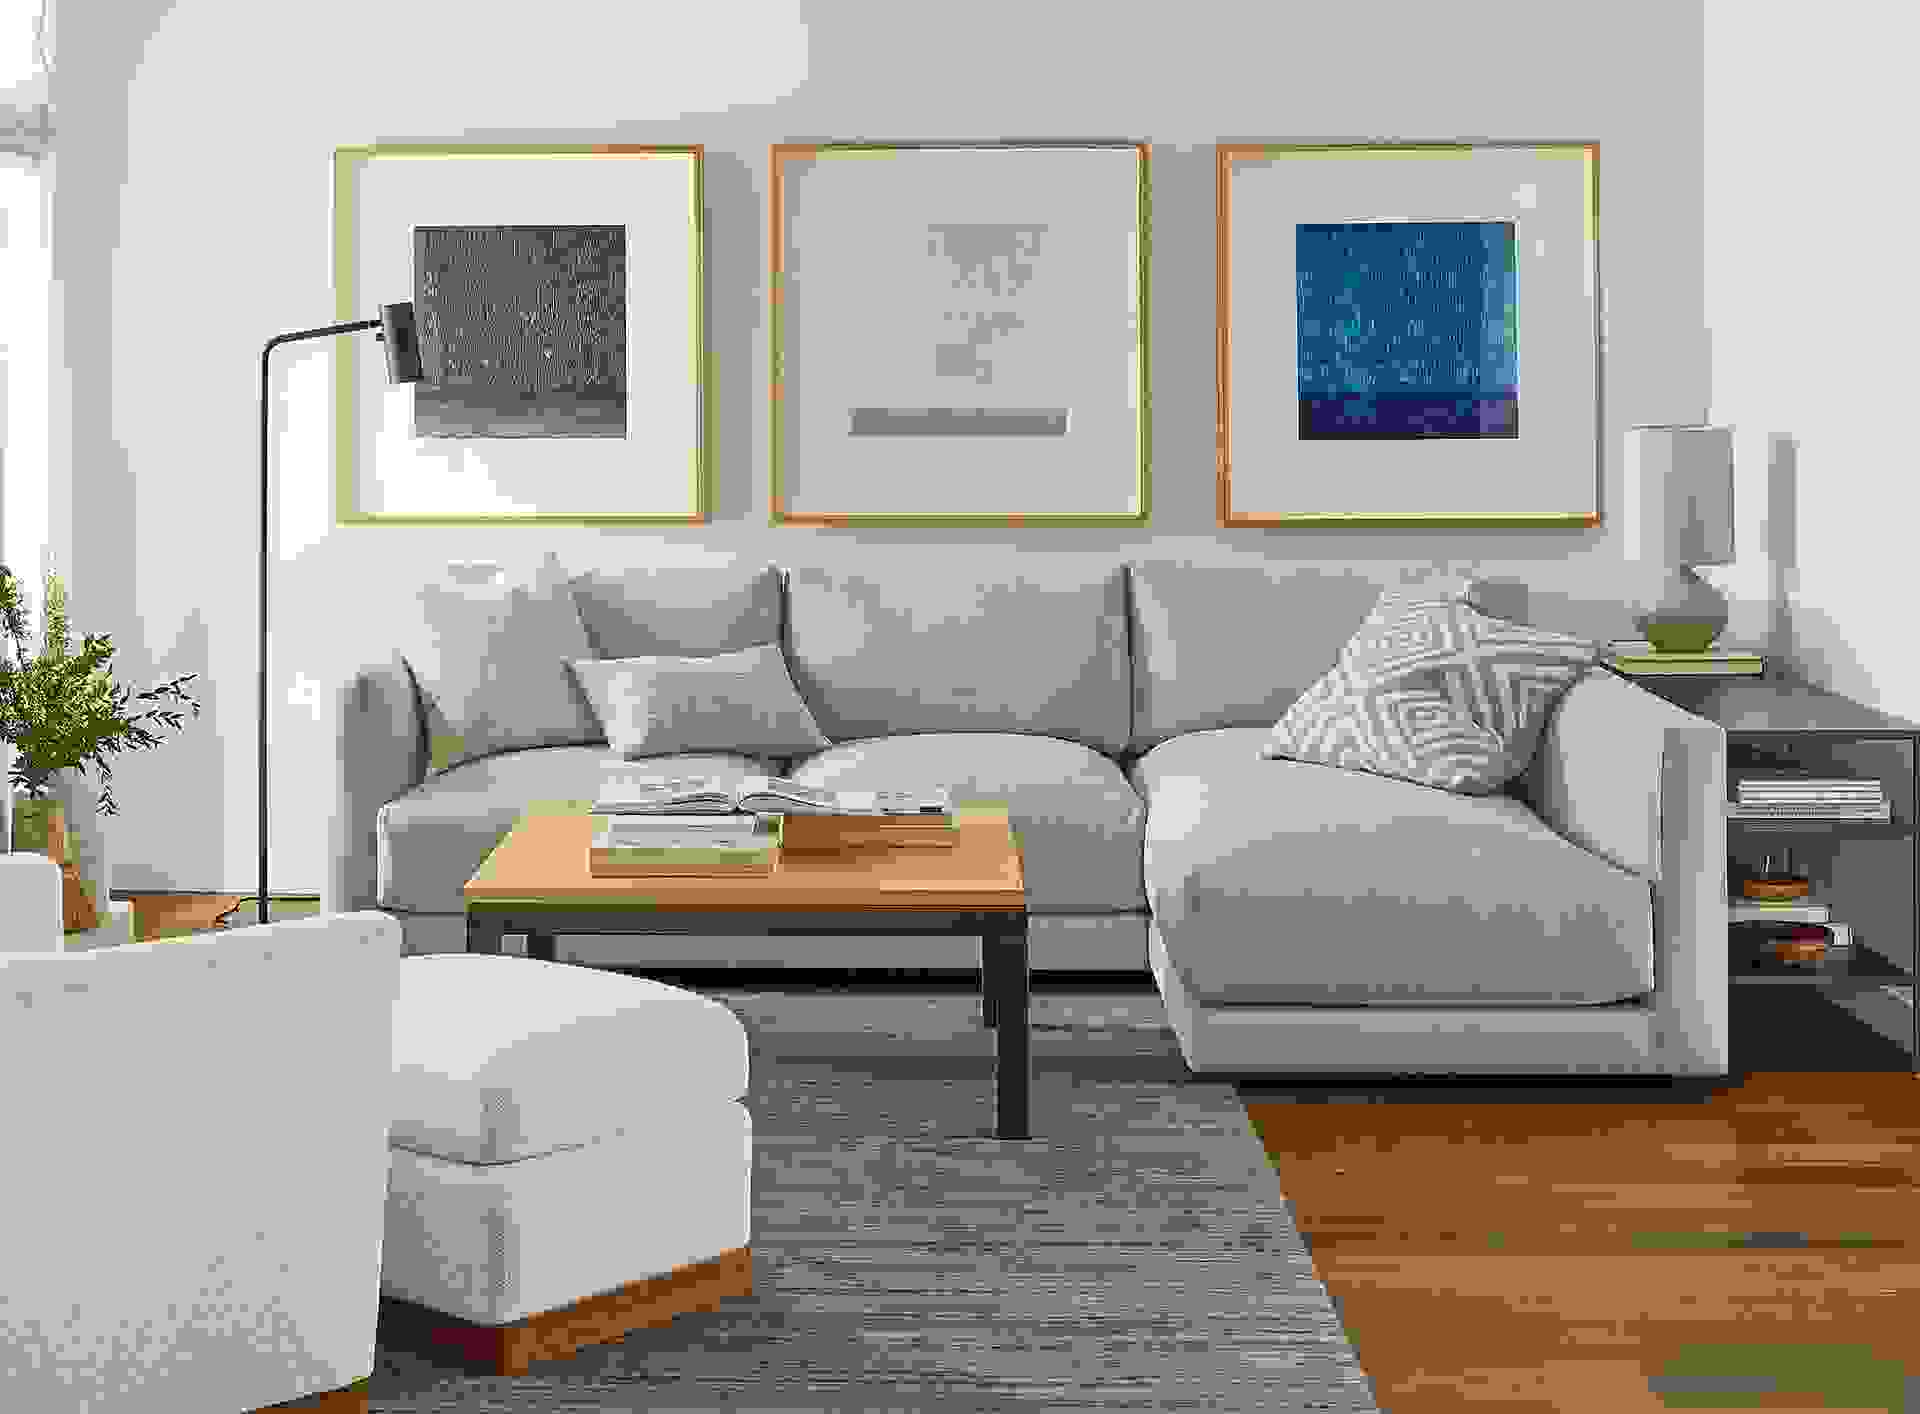 Detail of Clemens sofa in Flint oatmeal fabric in living room with Ayomi Yoshida wall art.